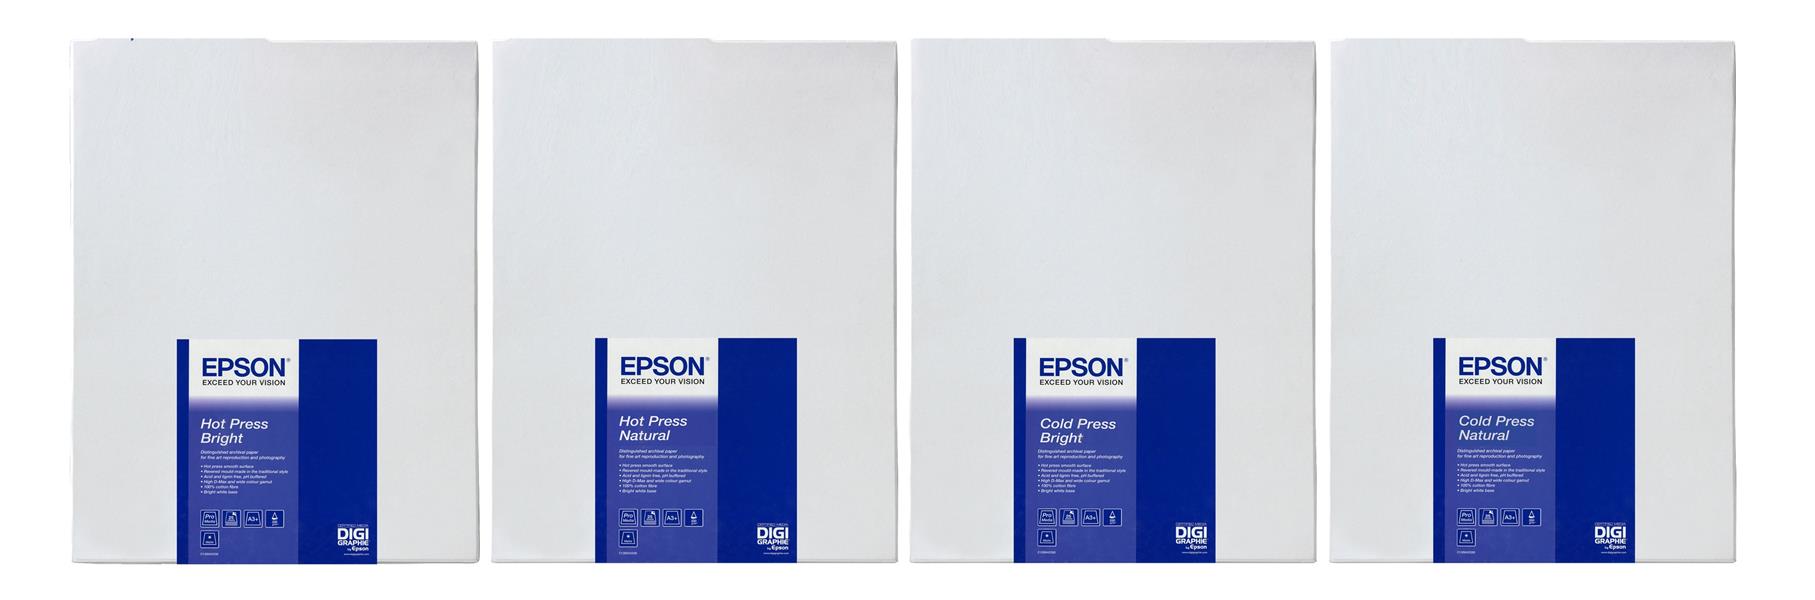 Epson Hot Press Natural 44""x 15m